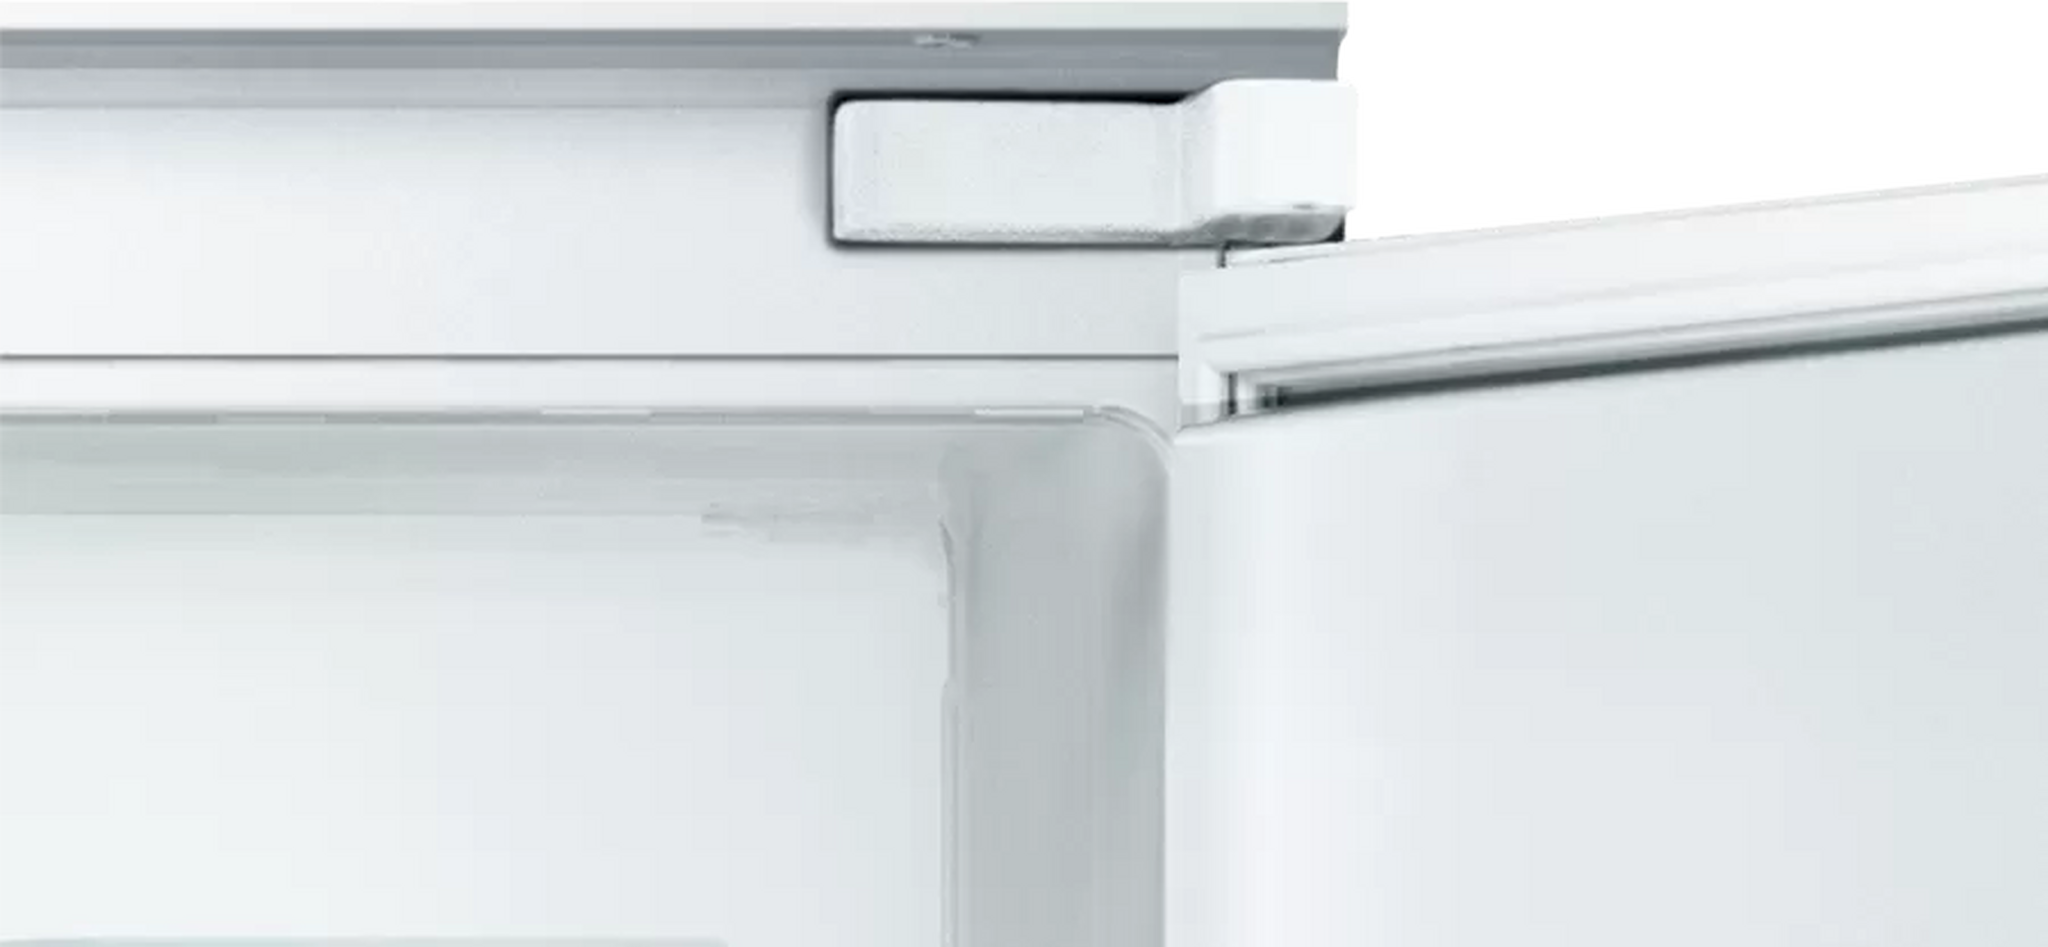 BoschÂ  Built In Single Door Refrigerator, 8CFT, 221-Liters, KIR24V20GB - White